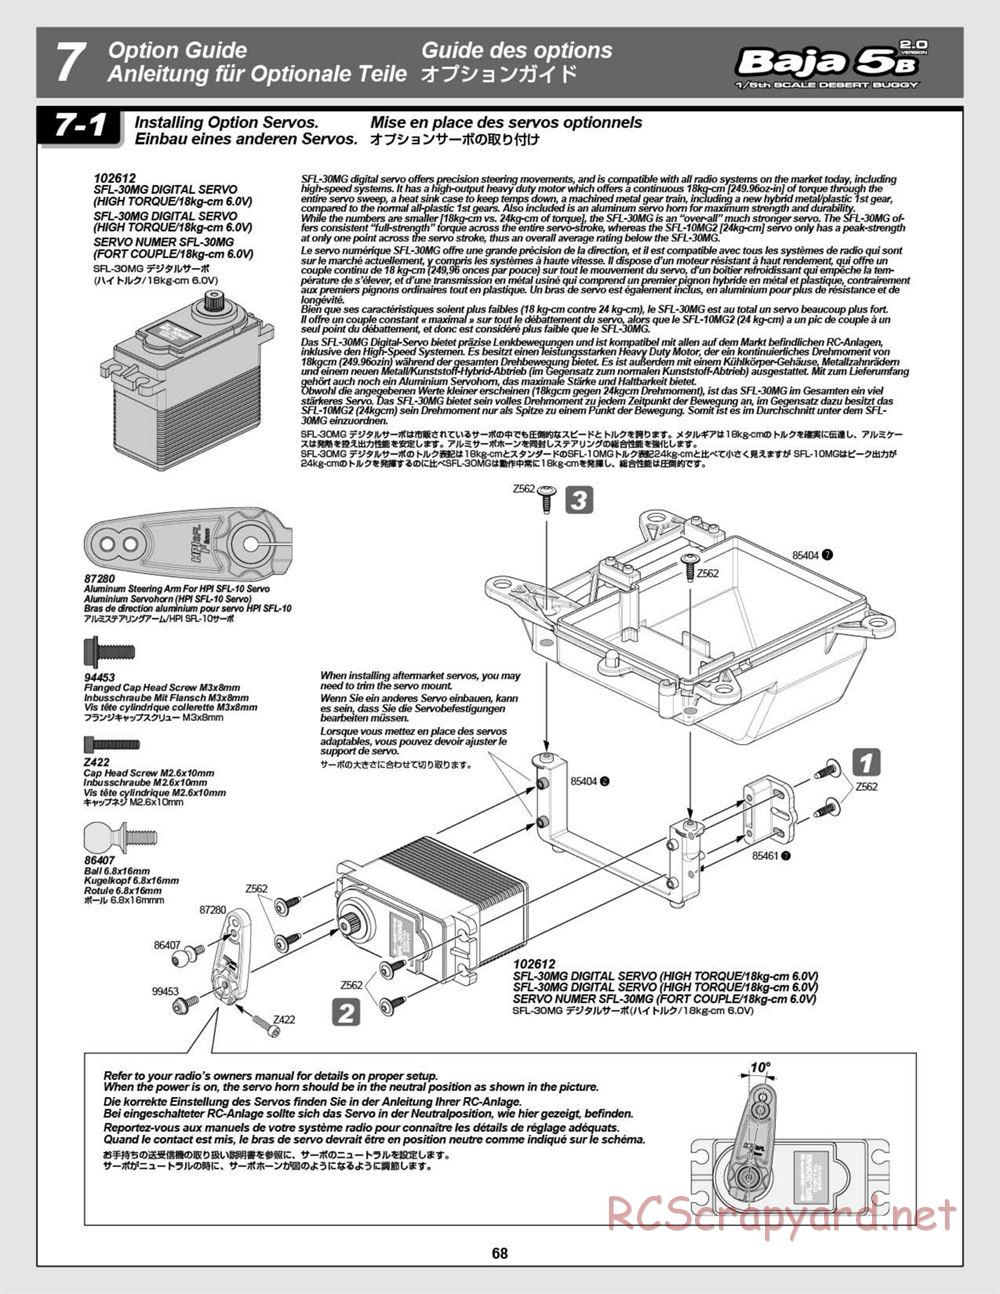 HPI - Baja 5B 2.0 RTR - Manual - Page 68